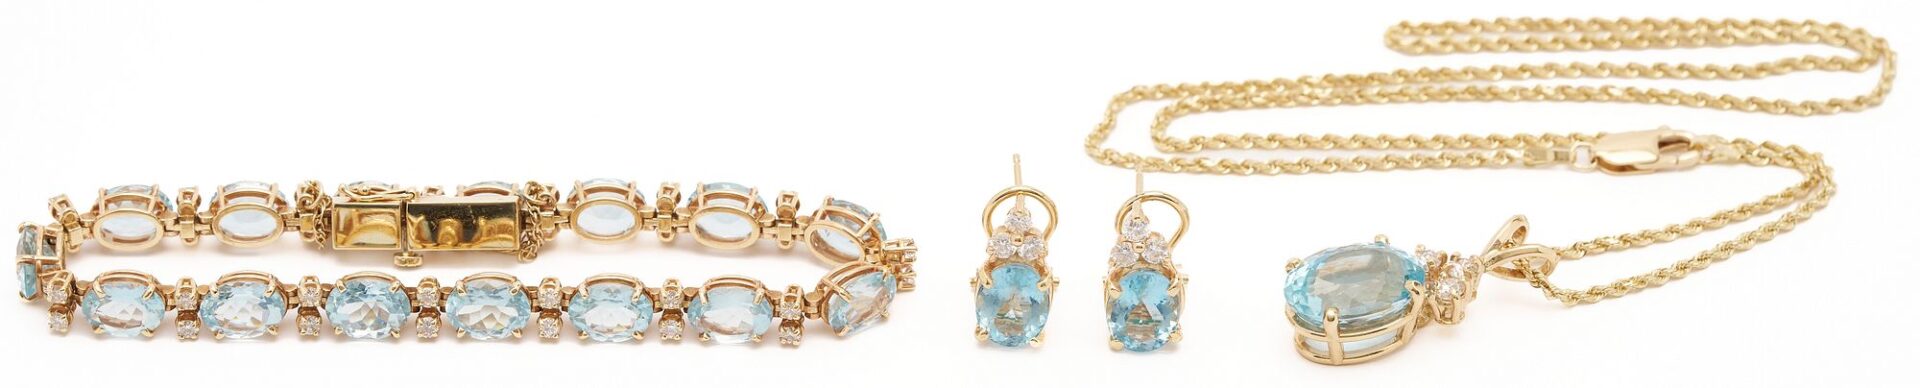 Lot 625: 3 14K Aquamarine & Diamond Jewelry Pieces